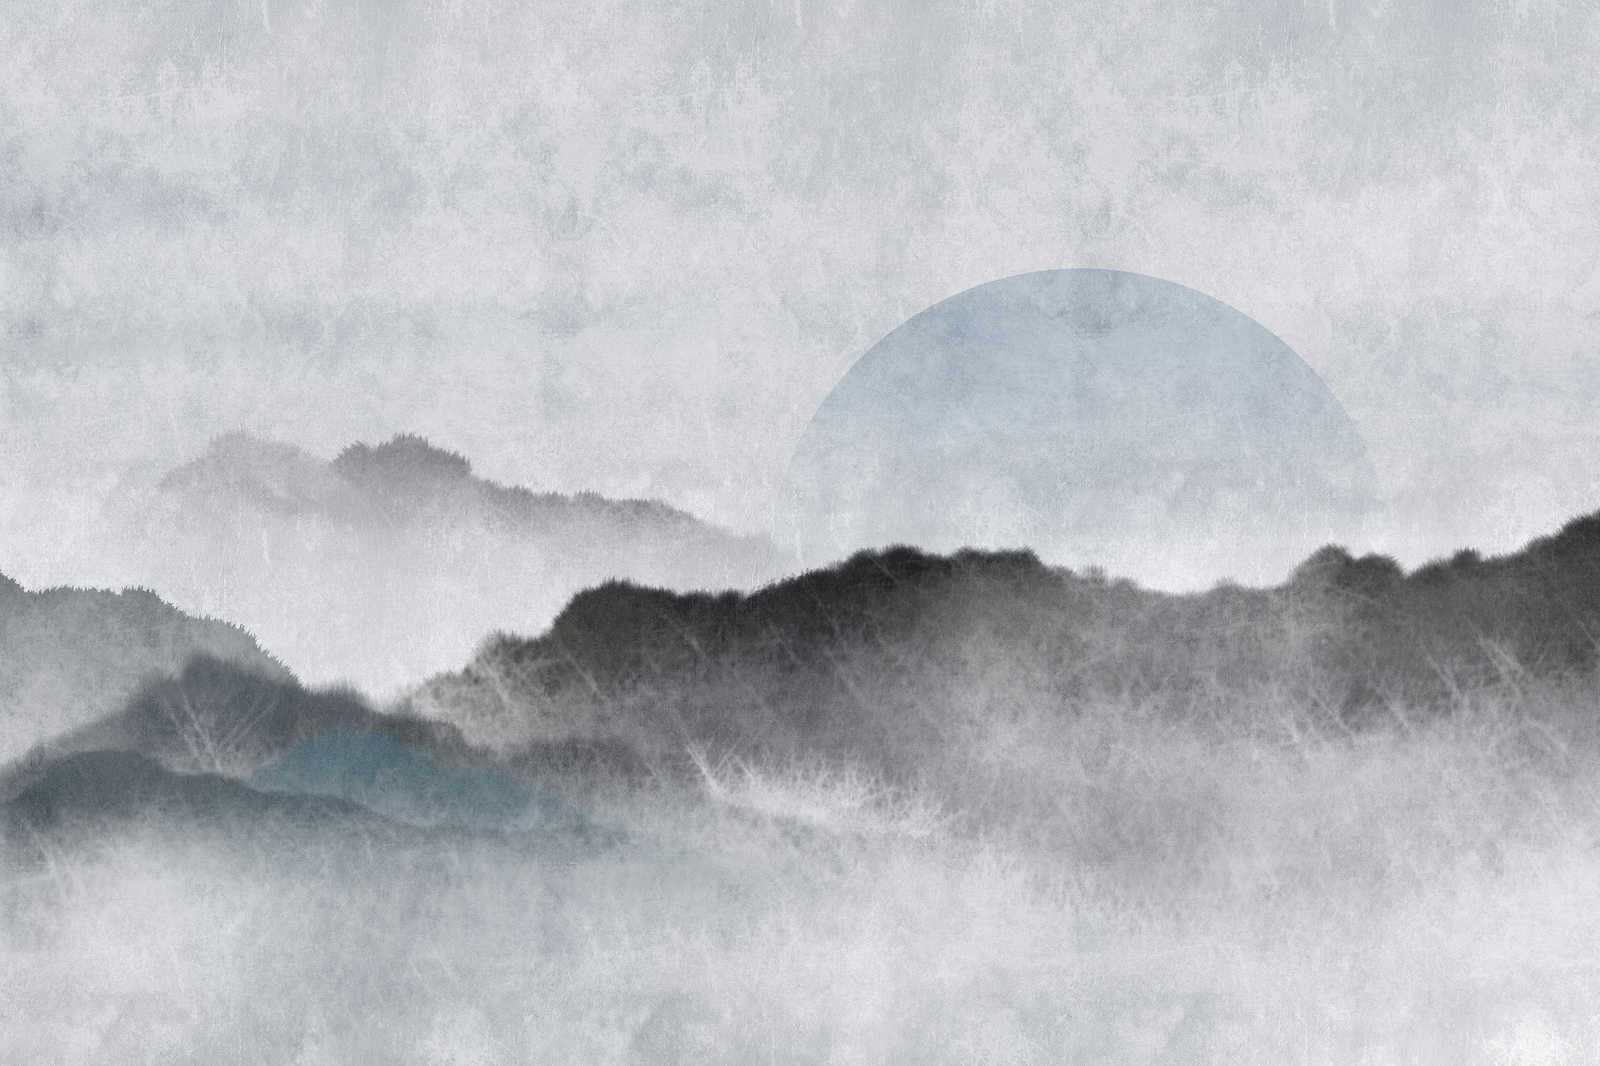             Akaishi 2 - Leinwandbild Asiatische Kunst Berglandschaft, Grau & Weiß – 0,90 m x 0,60 m
        